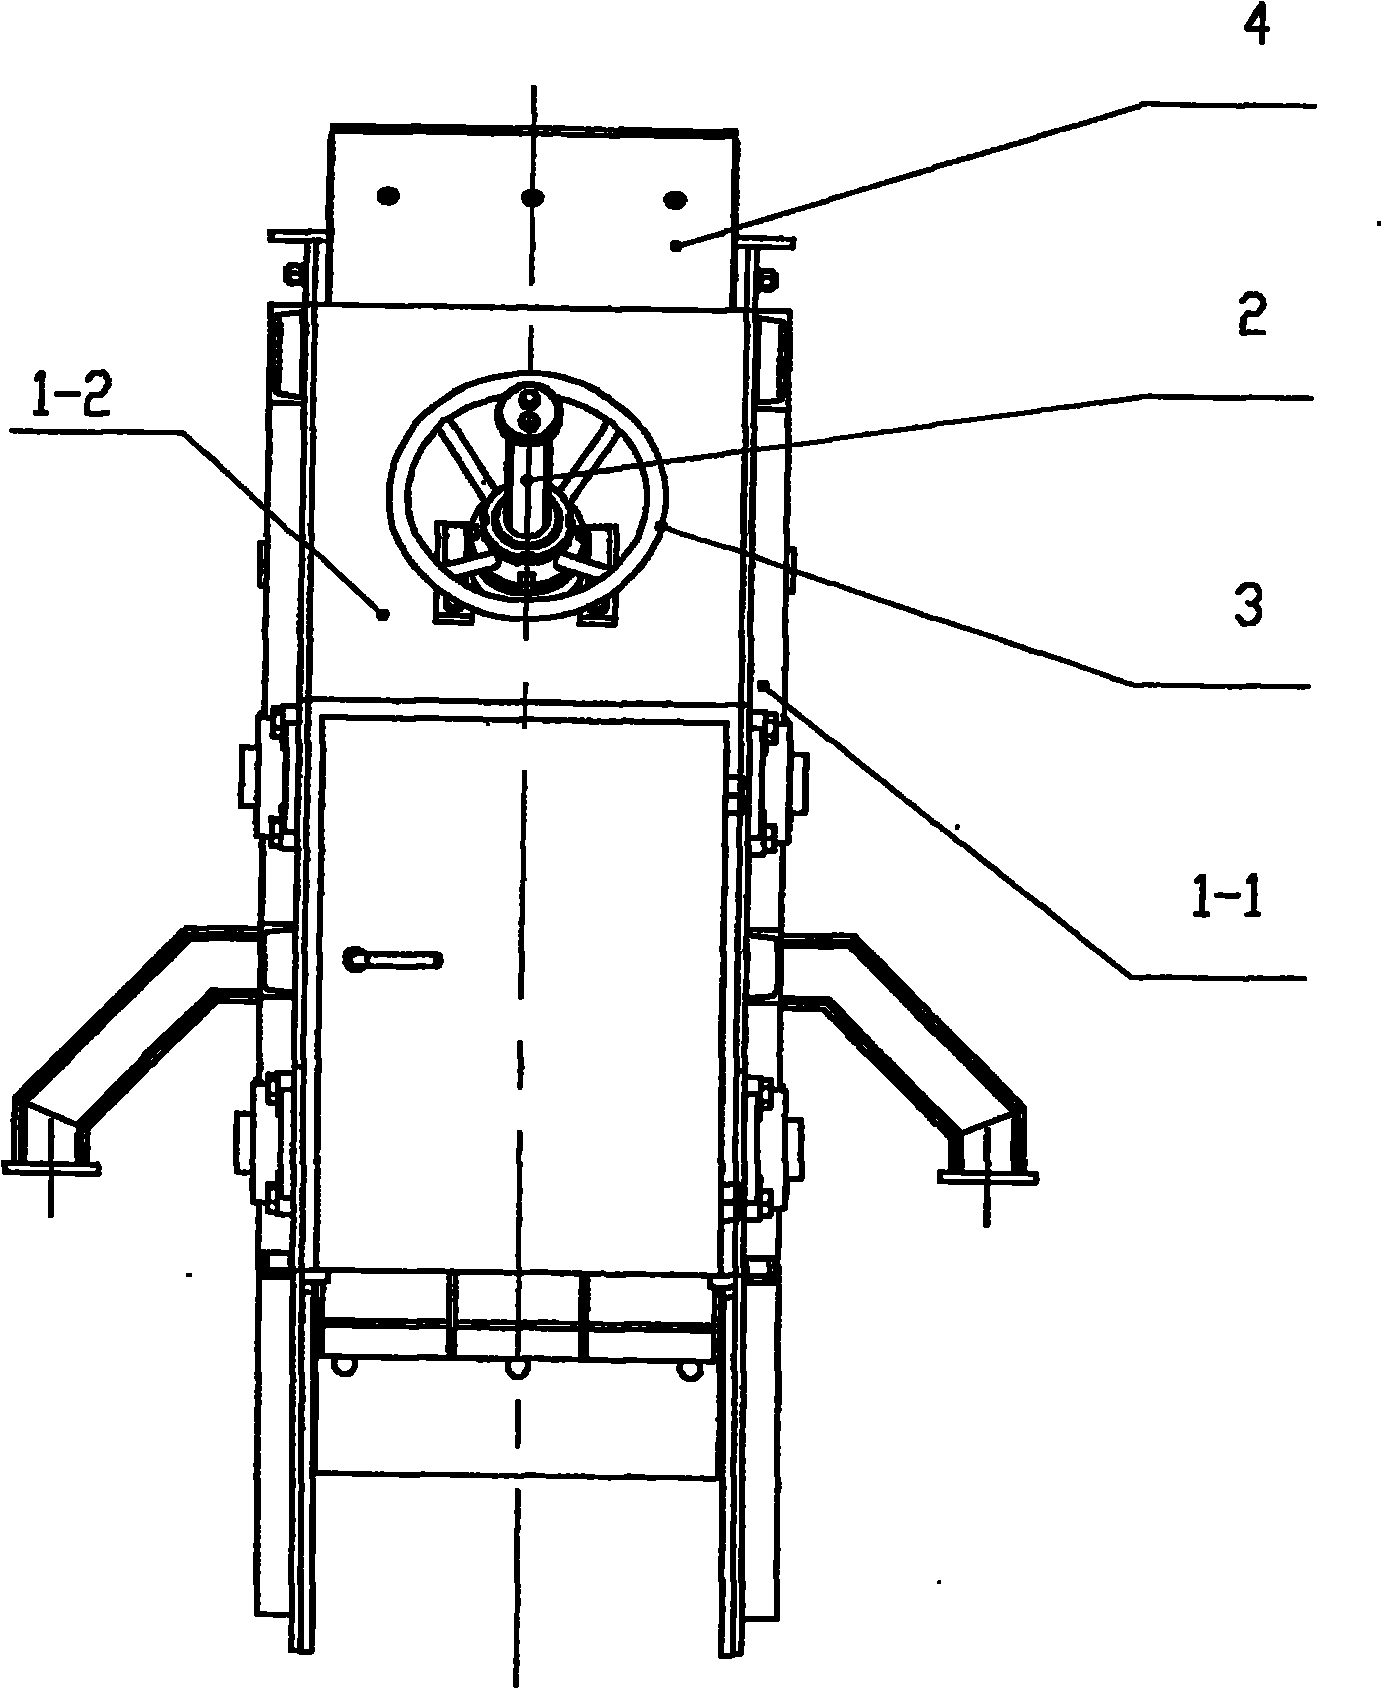 Feed apparatus of calender press